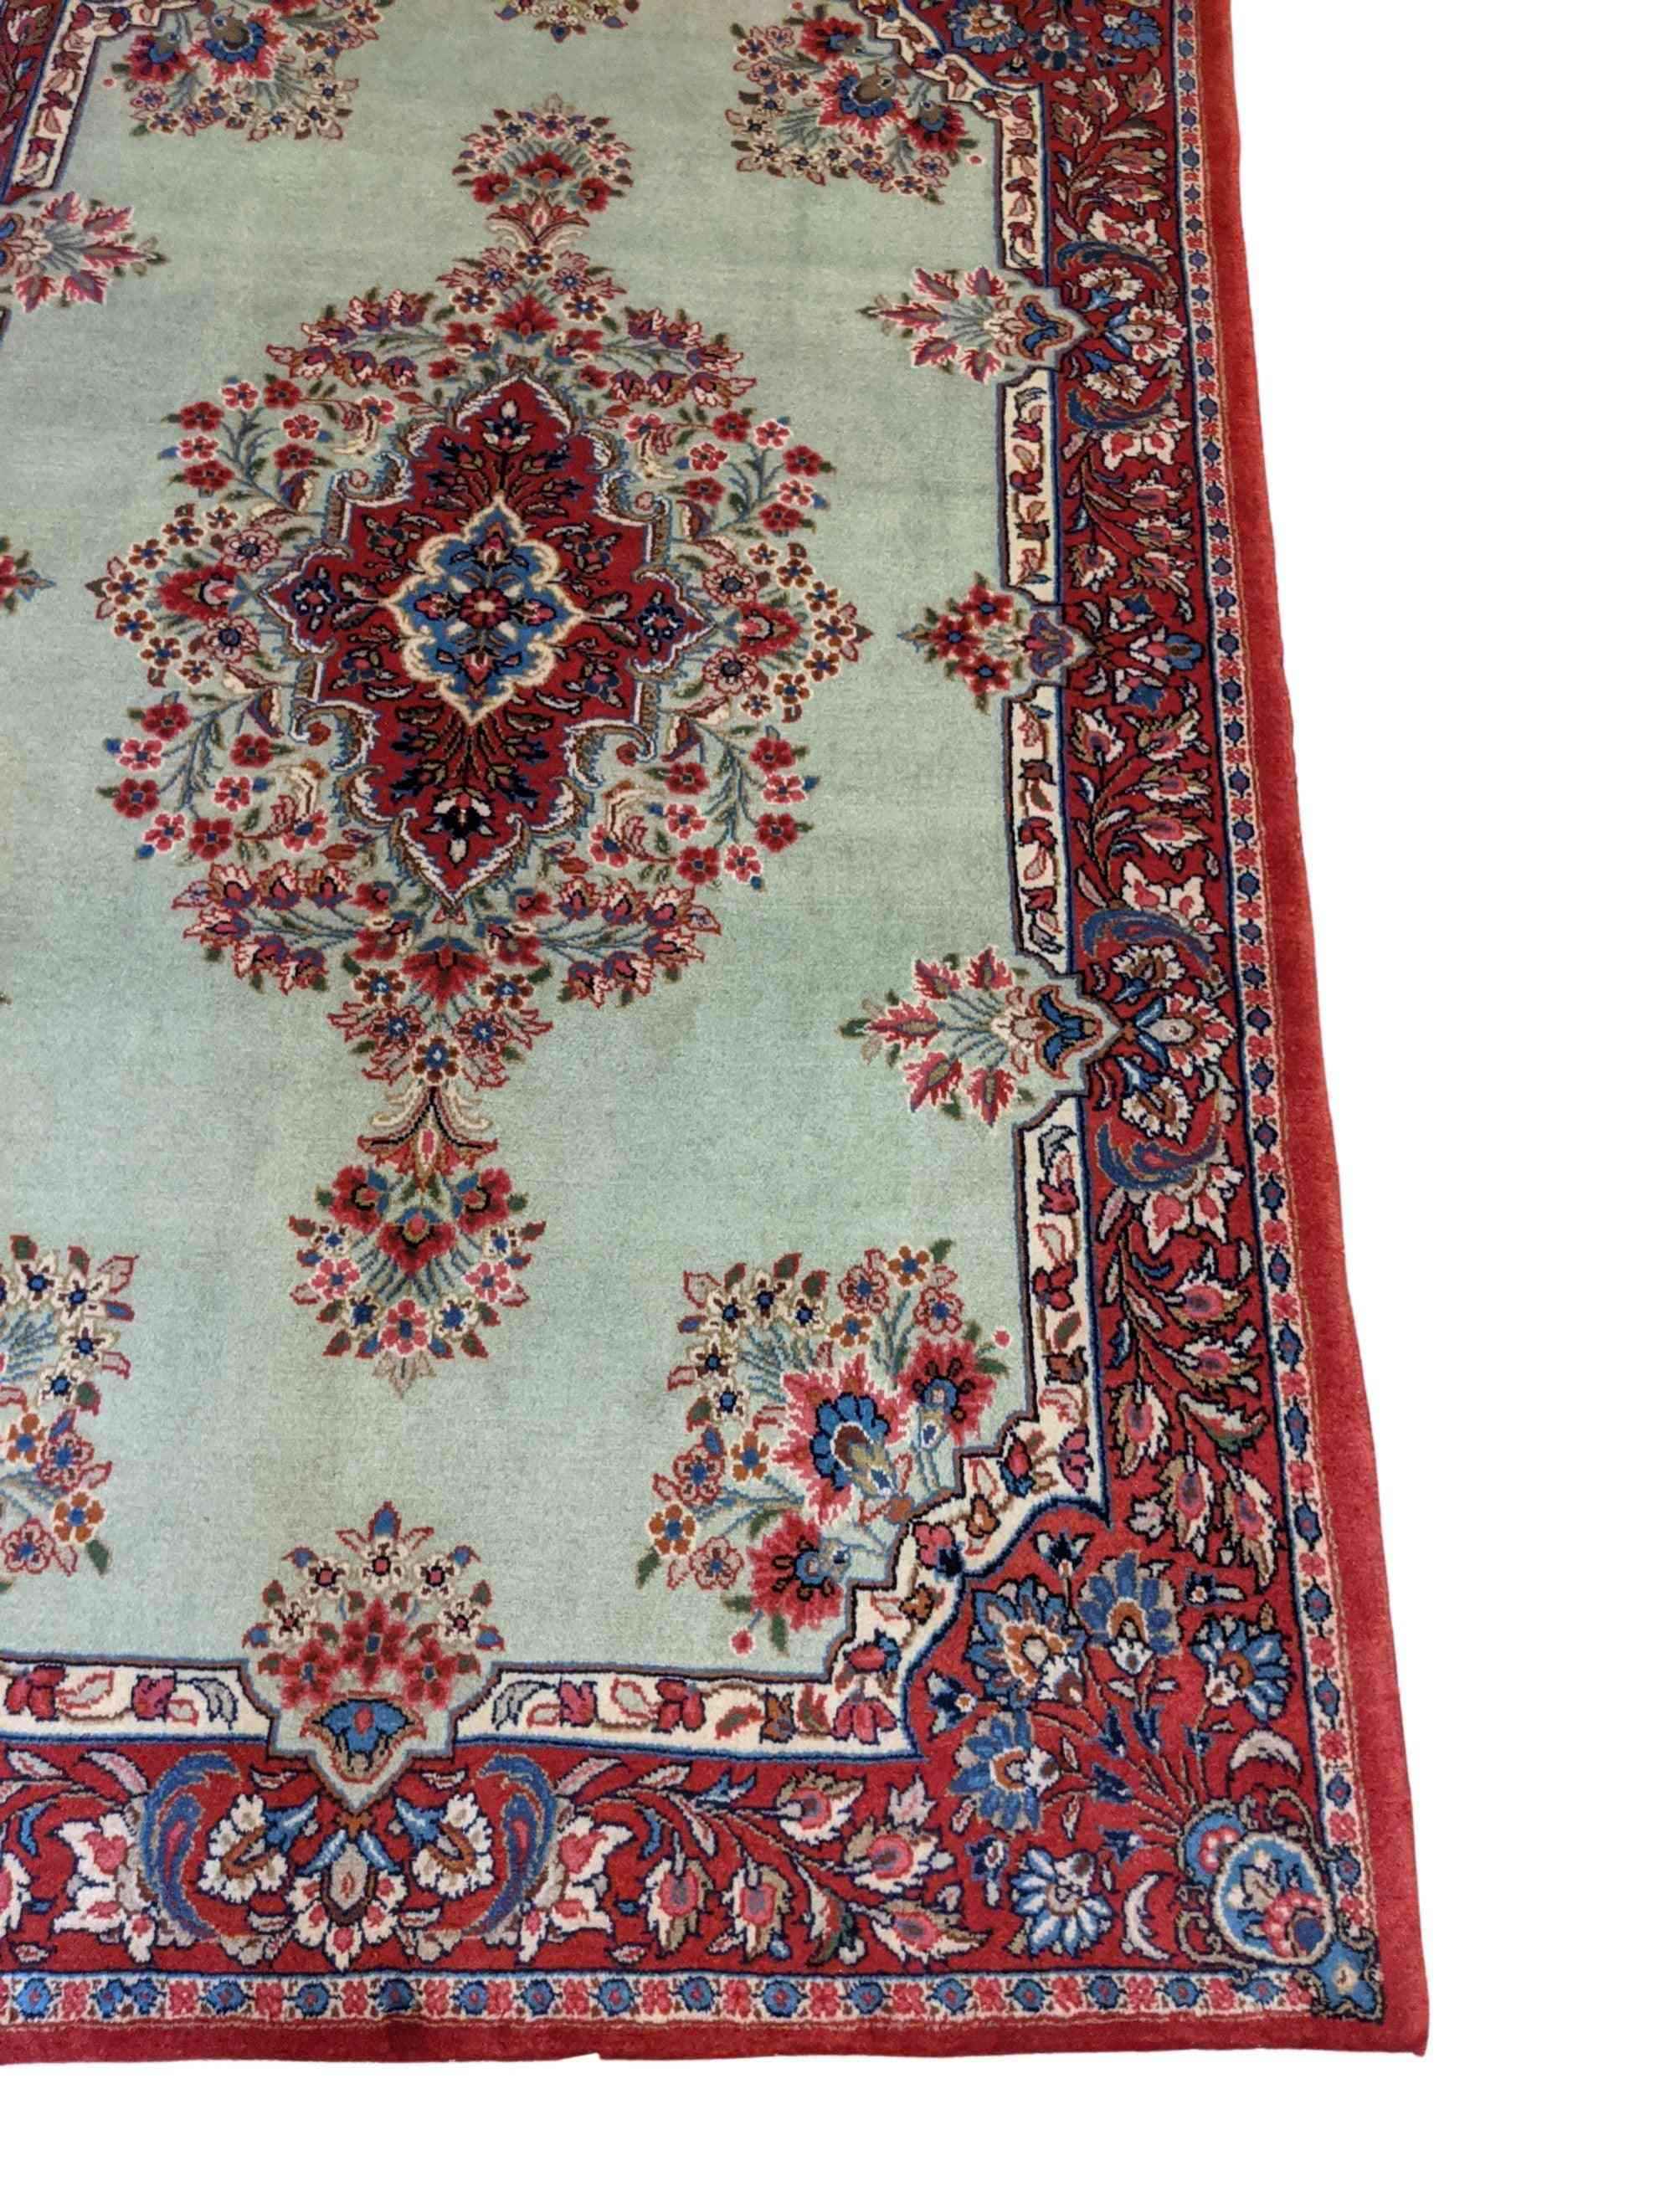 210 x 137 cm Persian Handmade Qum Traditional Red Rug - Rugmaster